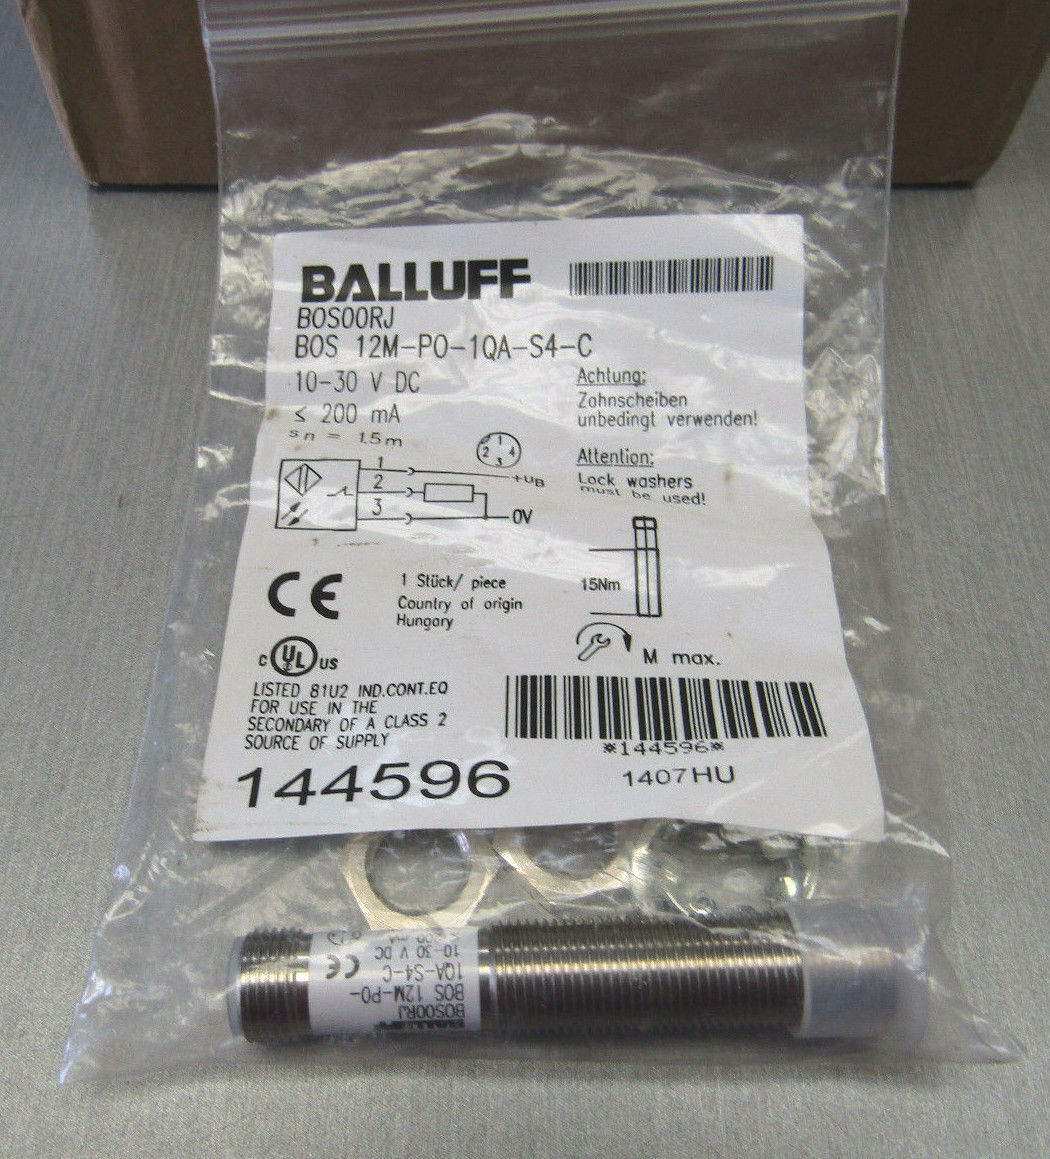 Balluff BOS00RJ Photoelectric sensor BOS 12M-PO-1QA-S4-C 144596